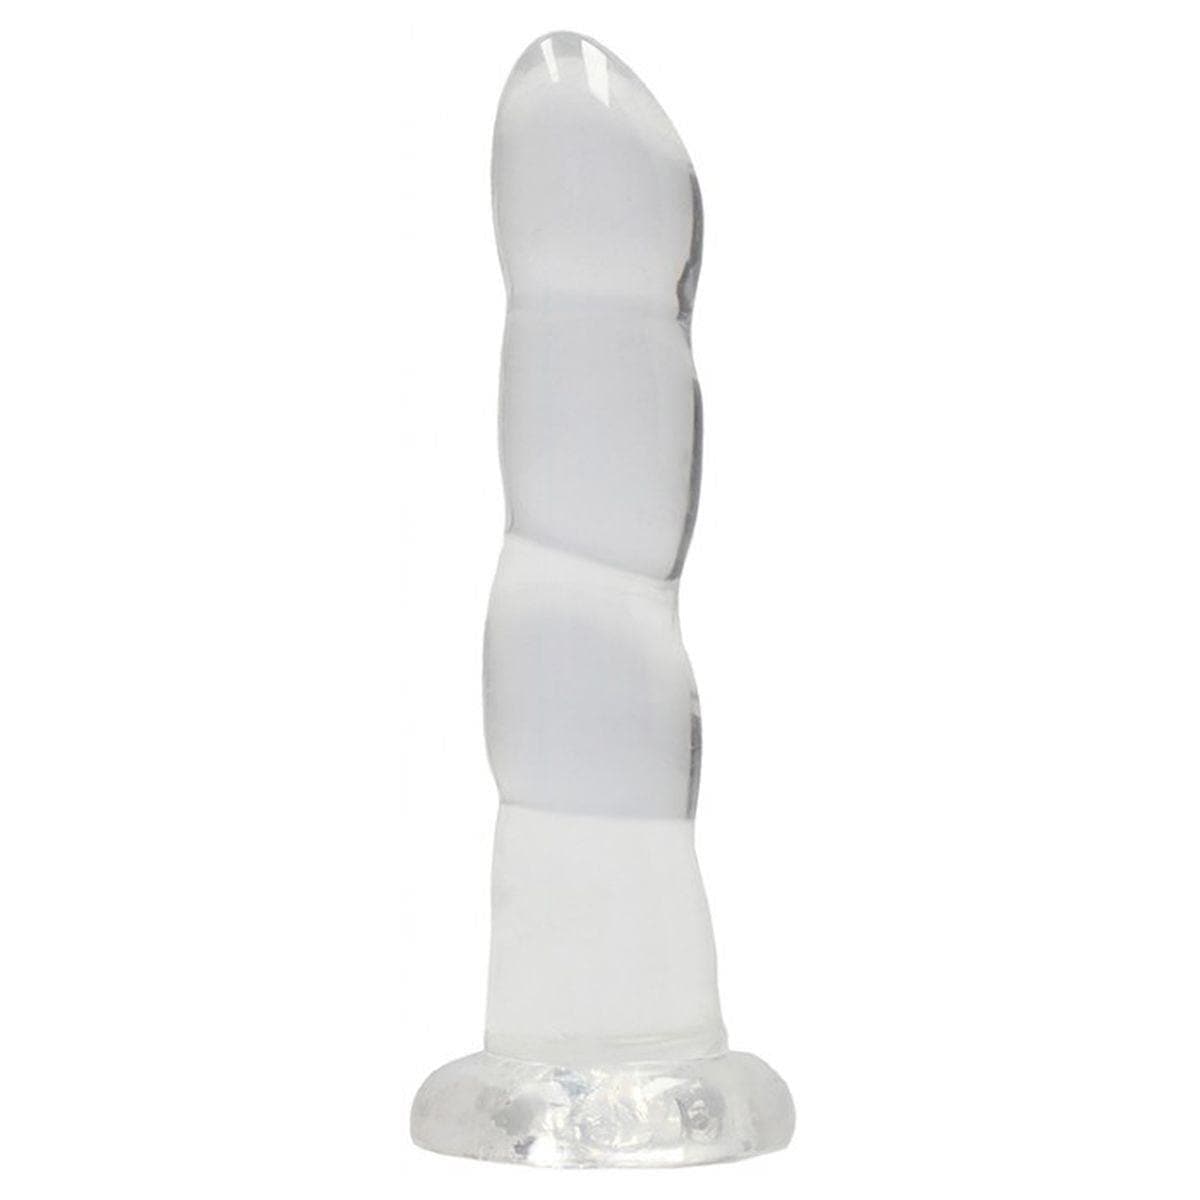 Dildo RealRock Liso Crystal Clear, 18cm Ø3.5cm - Pérola SexShop